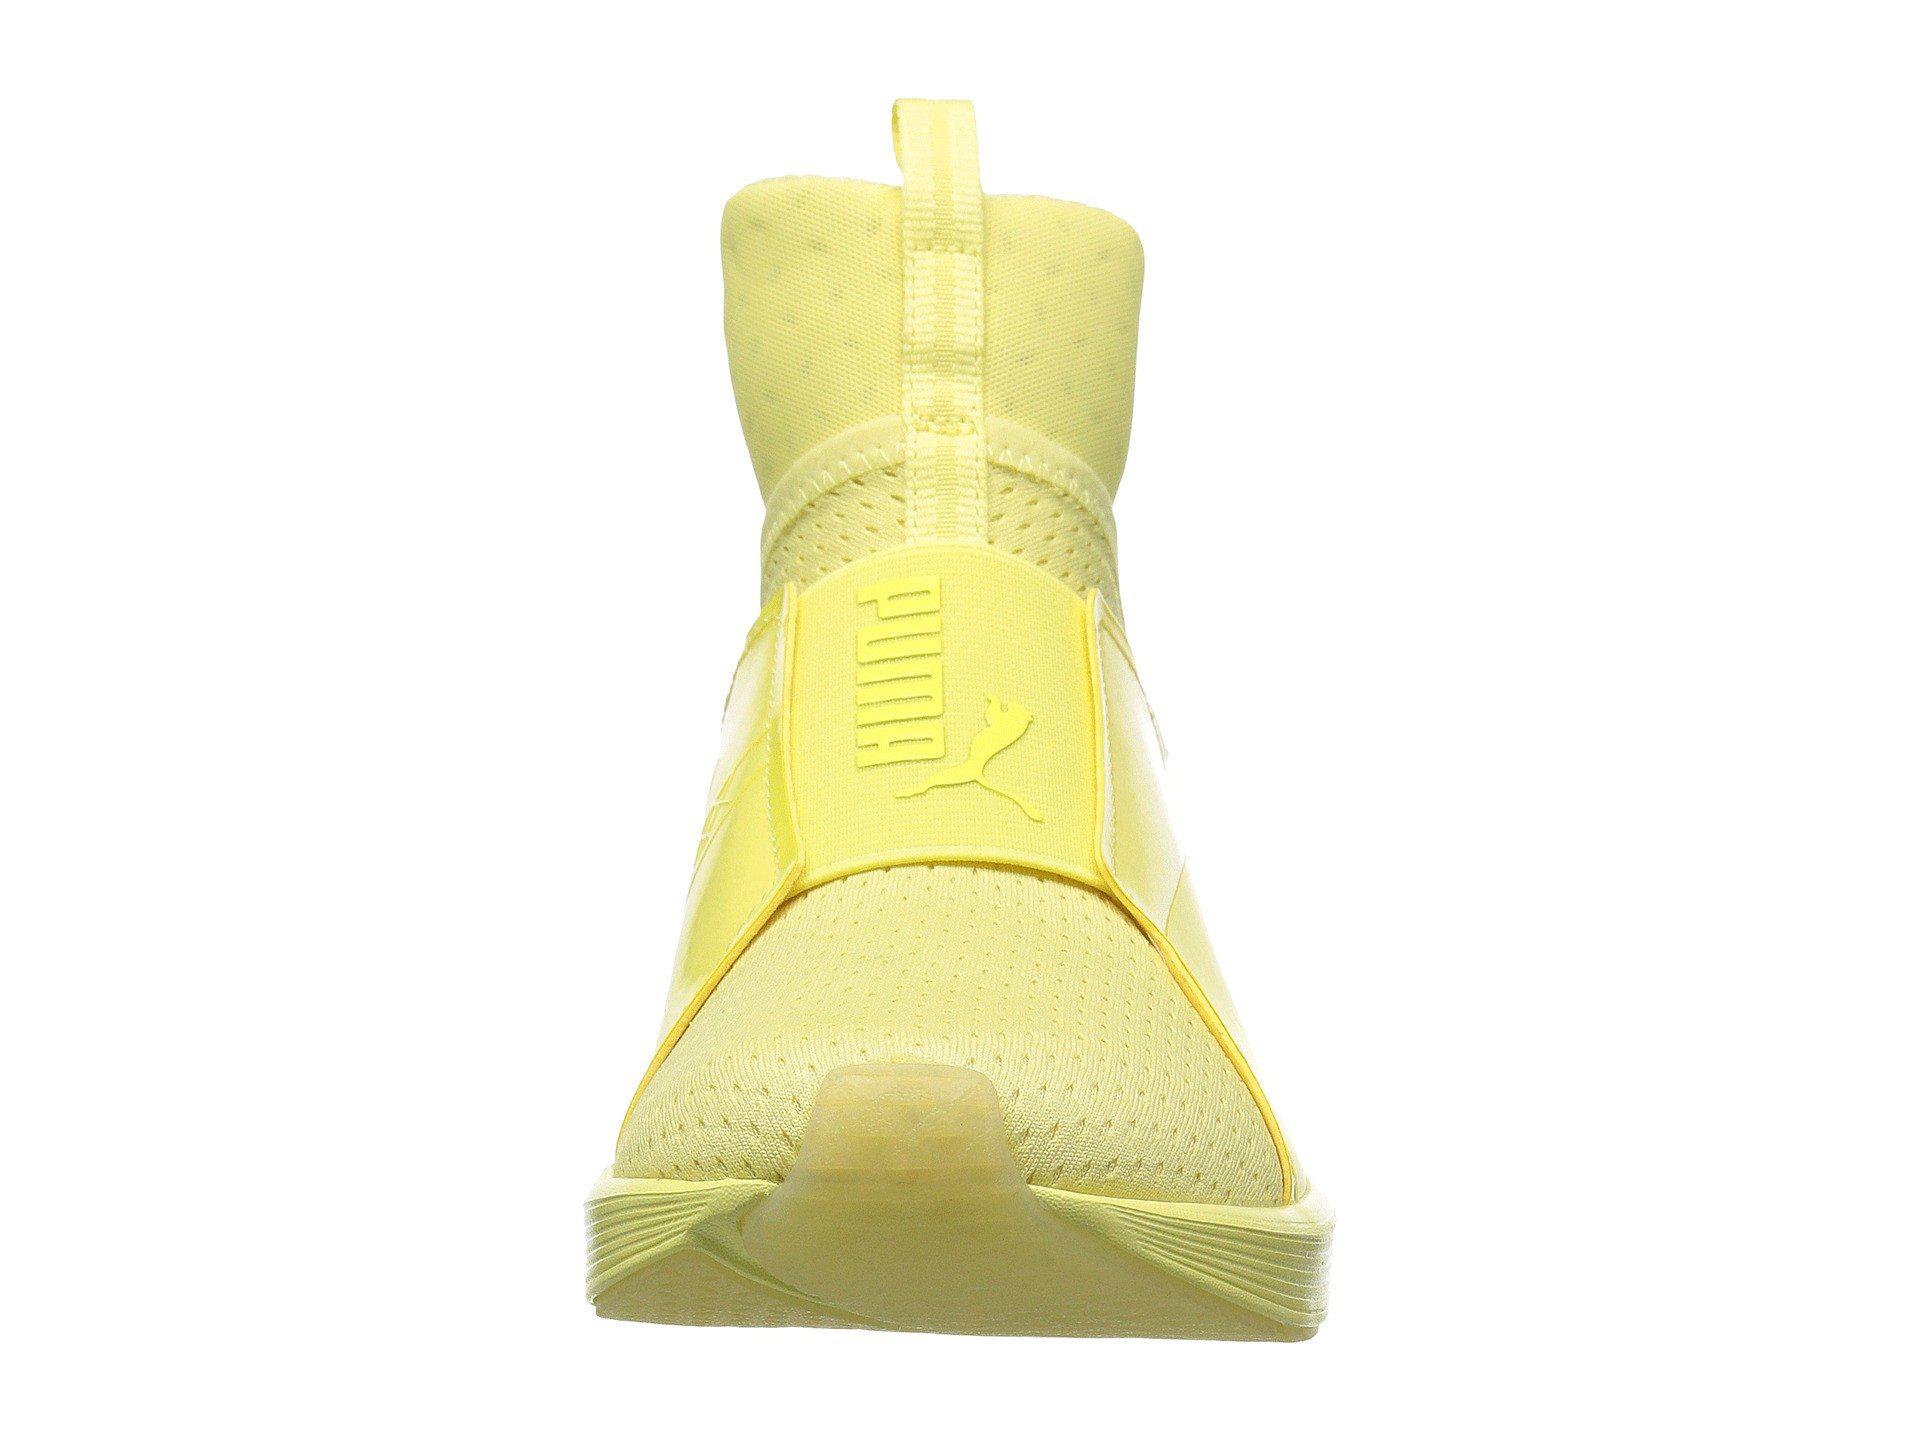 PUMA Rubber Fierce Bright Mesh Cross-trainer Shoe in Yellow - Lyst